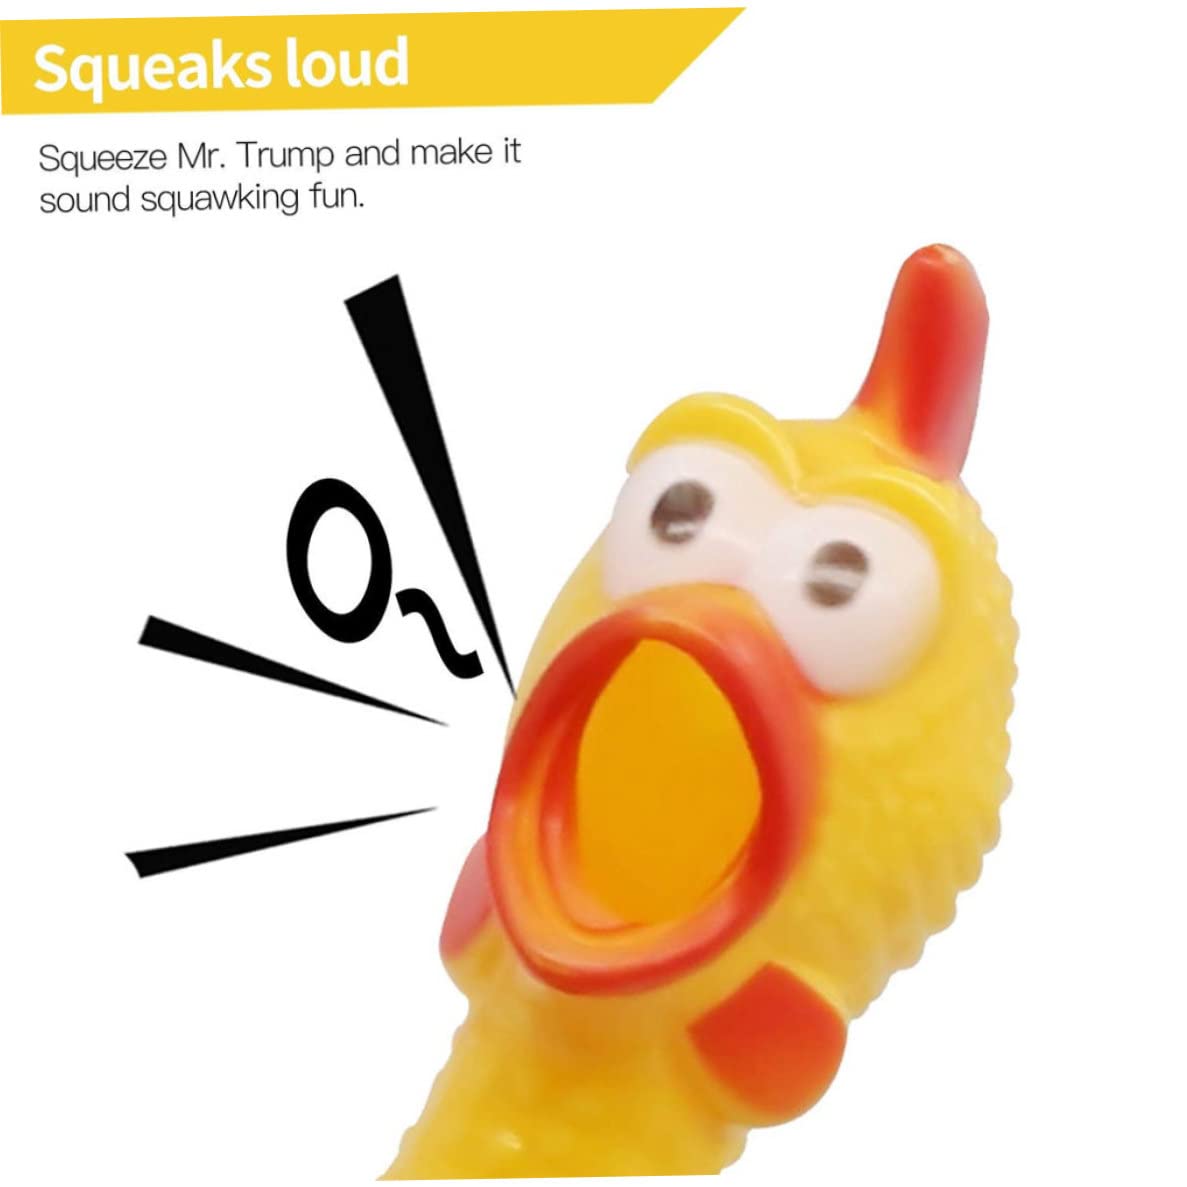 Squeaky Screaming Chicken Fun Pet